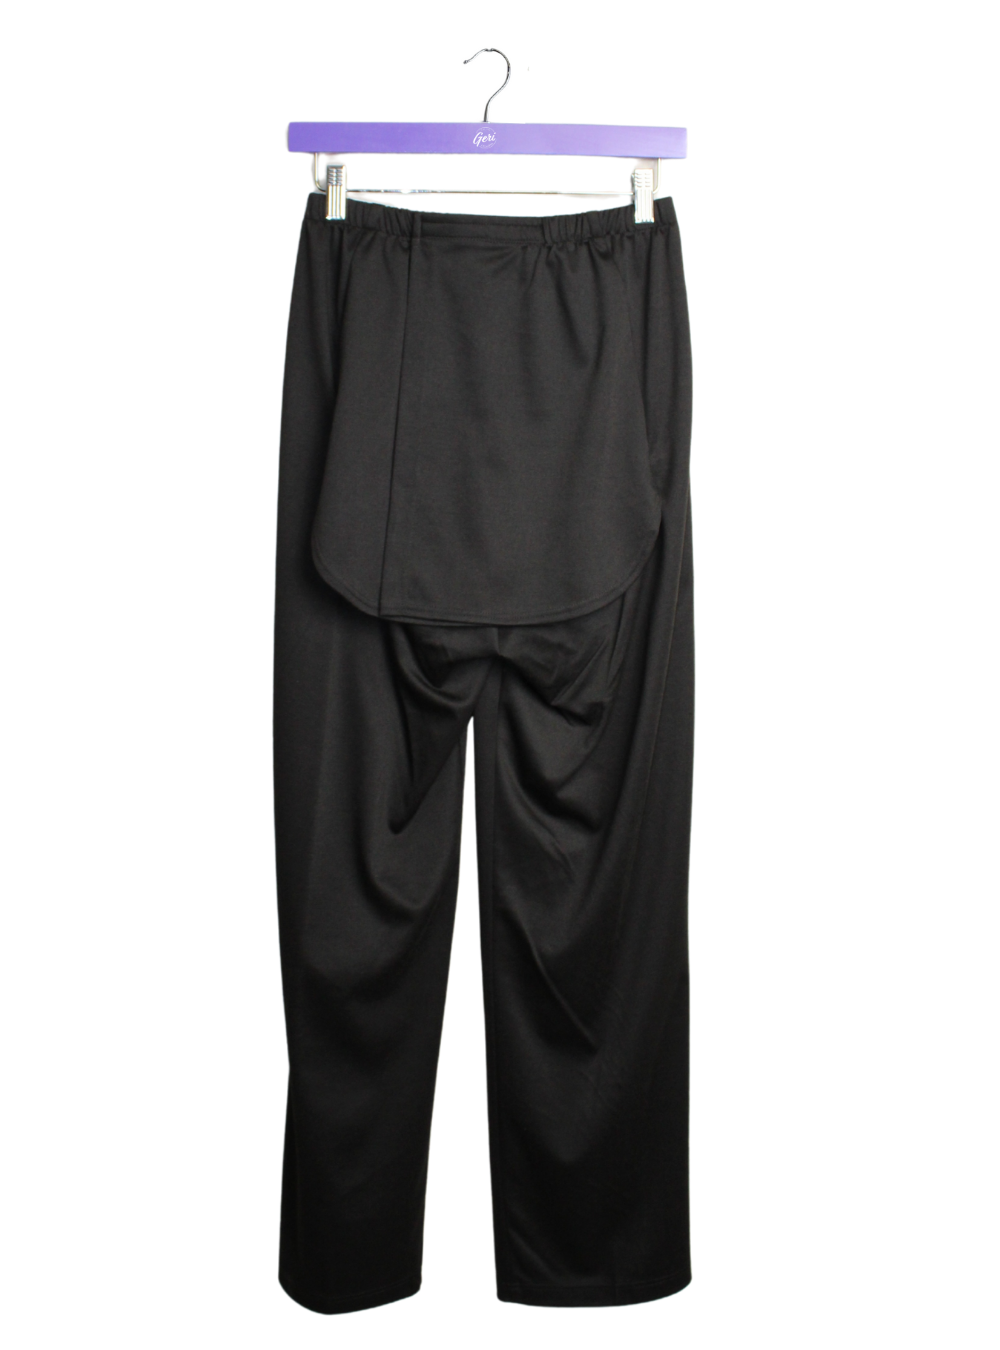 Adaptive Ladies' Cozy Knit Open Back Pants - Black